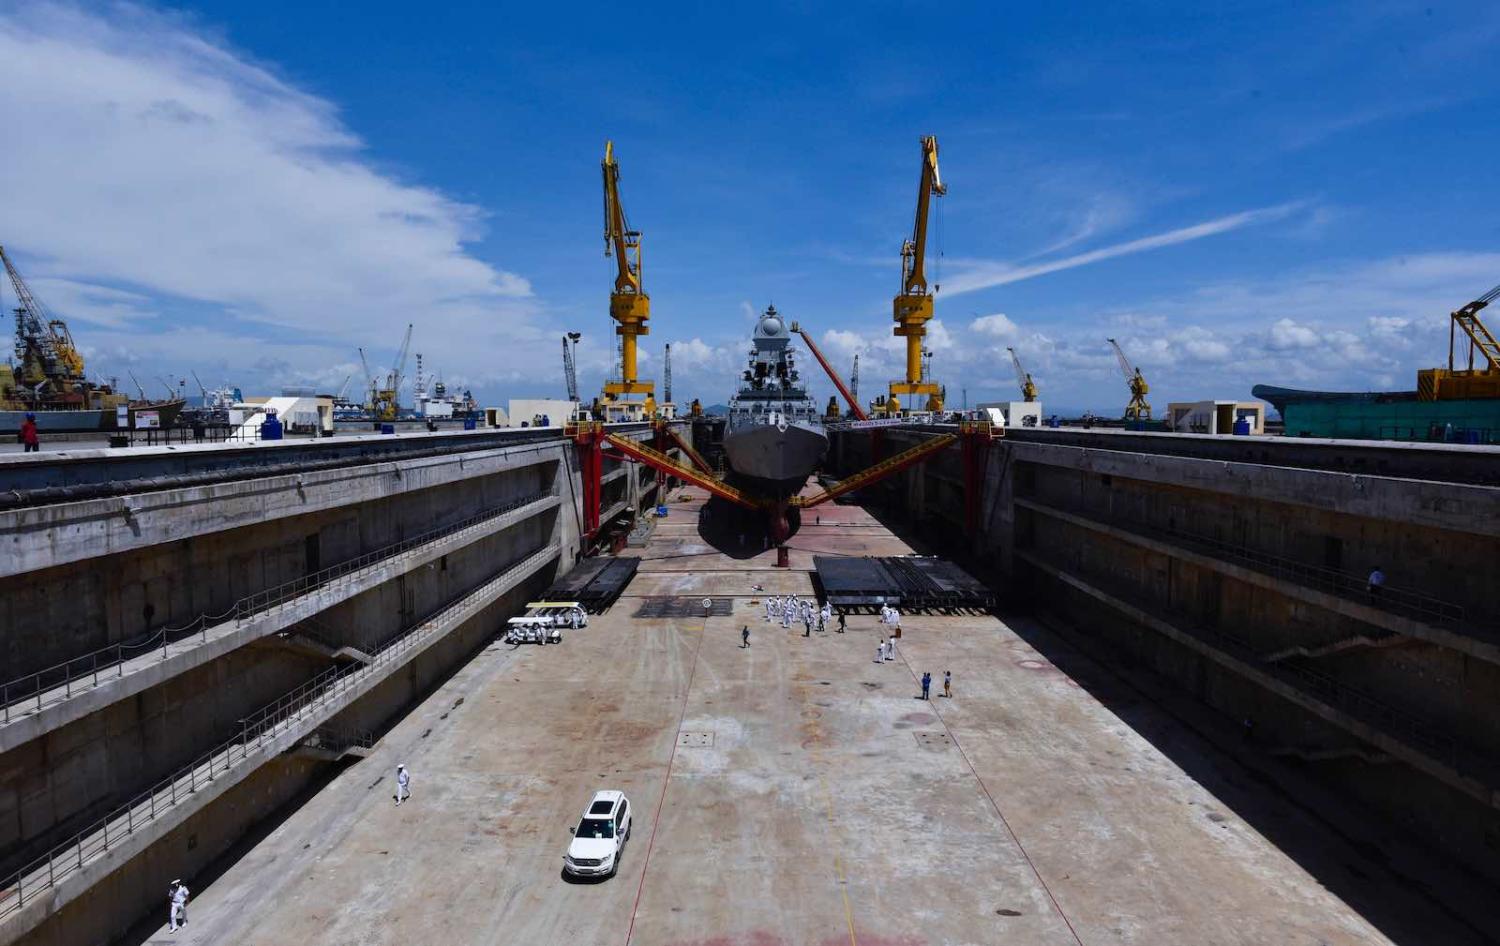 The inauguration of Aircraft Carrier Dry Dock, capable of accommodating INS Vikramaditya, at the Naval Dockyard in Mumbai, 28 September 2019 (Photo: Anshuman Poyrekar/Hindustan Times via Getty)